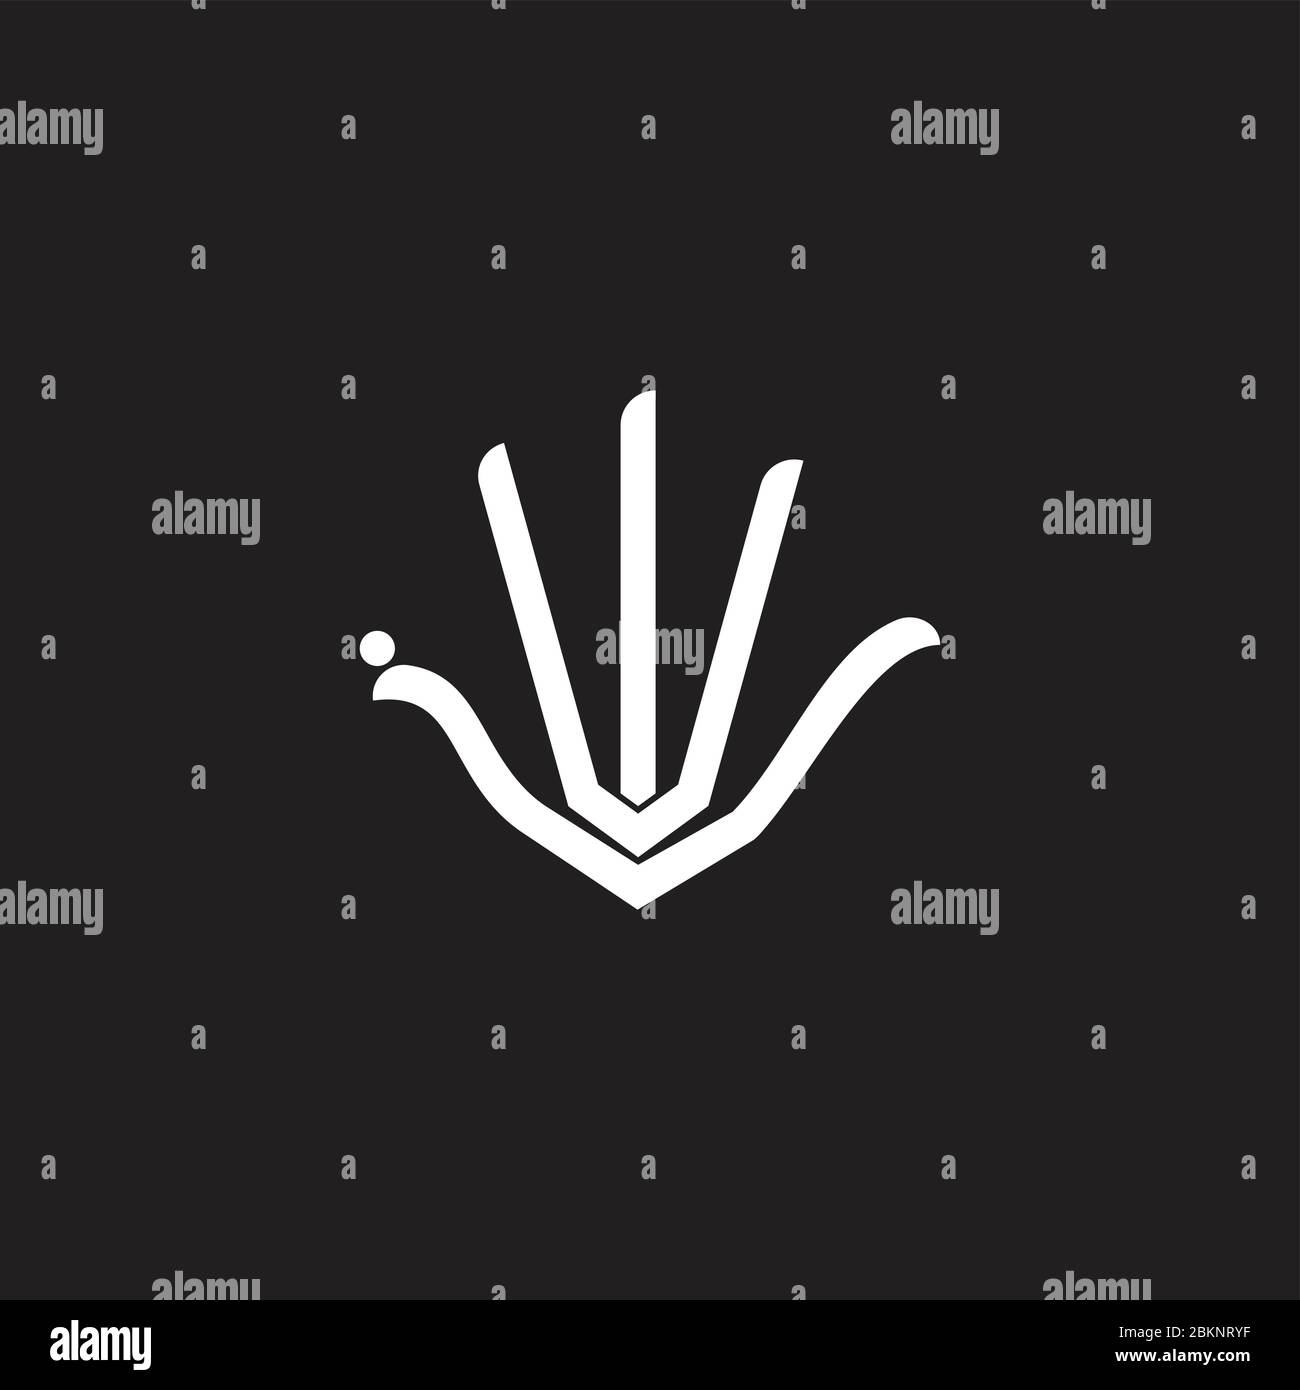 five fingers simple lines art symbol logo vector Stock Vector